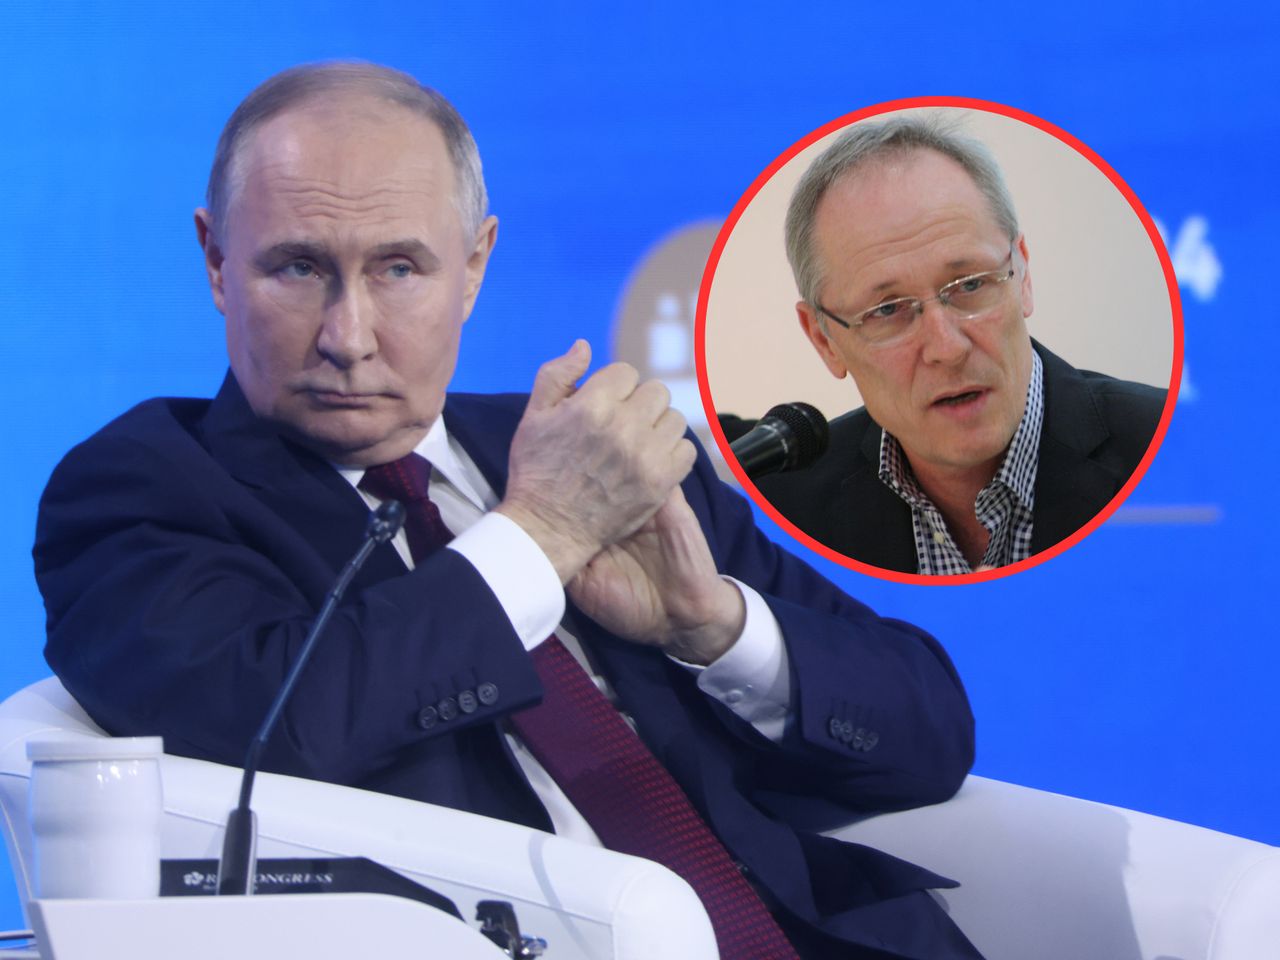 German expert straightforward about Russia. "Putin will not lose this war"